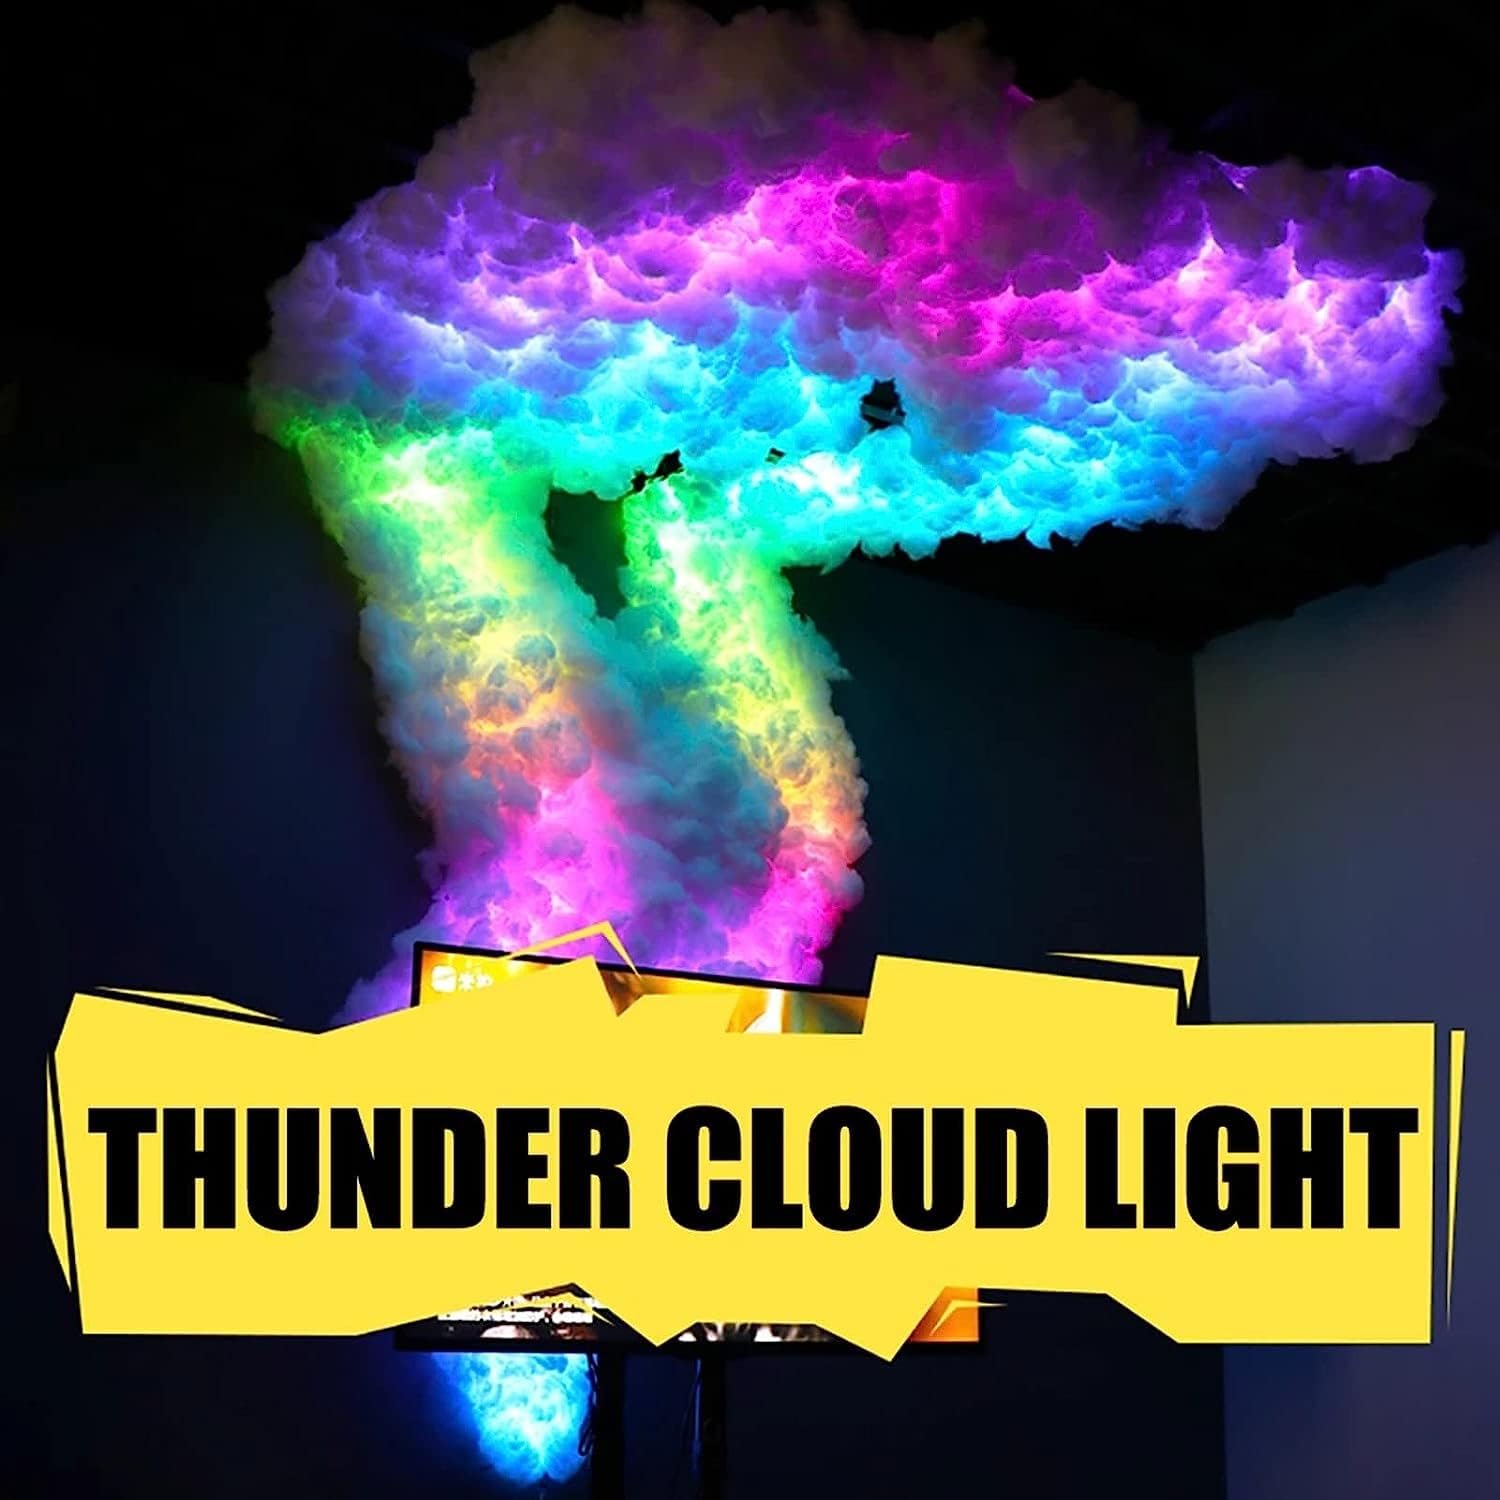 Big Cloud Lightning Light Kit, Multicolor Lightning Lights, Colorful Atmosphere Night Light, Bar Decoration Led Light Strip, for Adults and Kids Indoor Home Bedroom Wall,40m